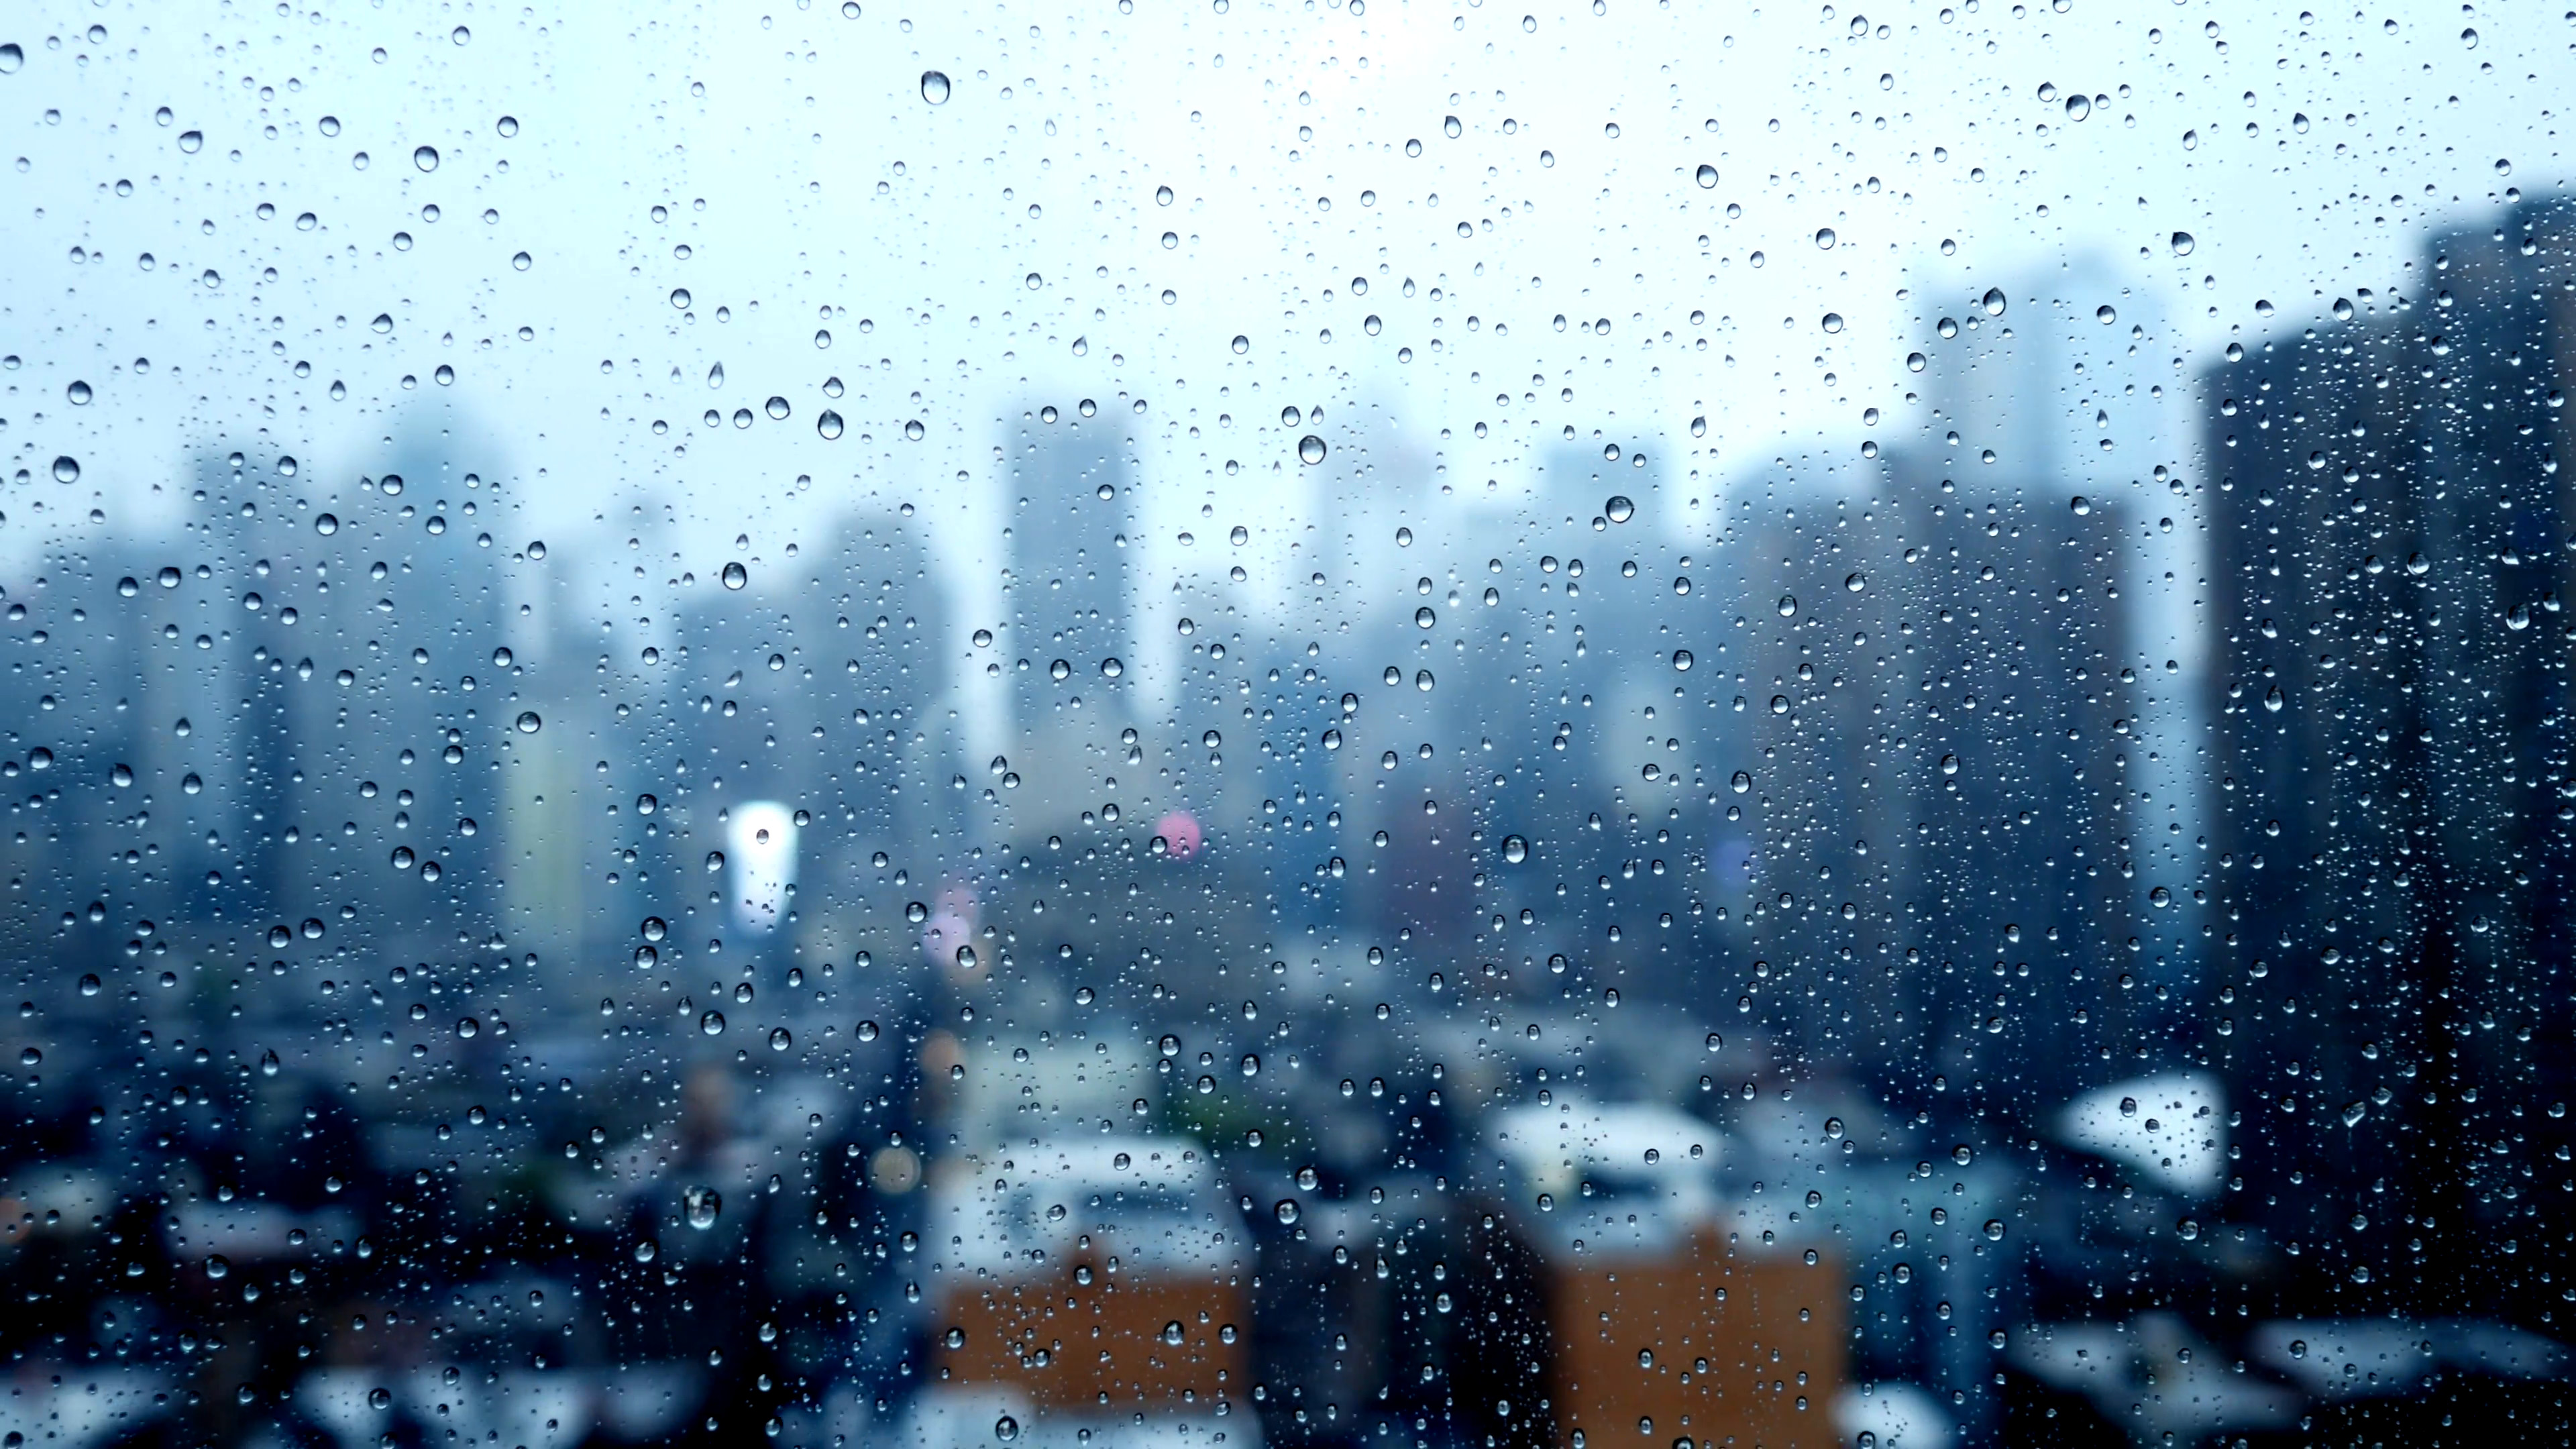 3840x2160 city skyline background on a rainy wet weather day. sad mood depressive